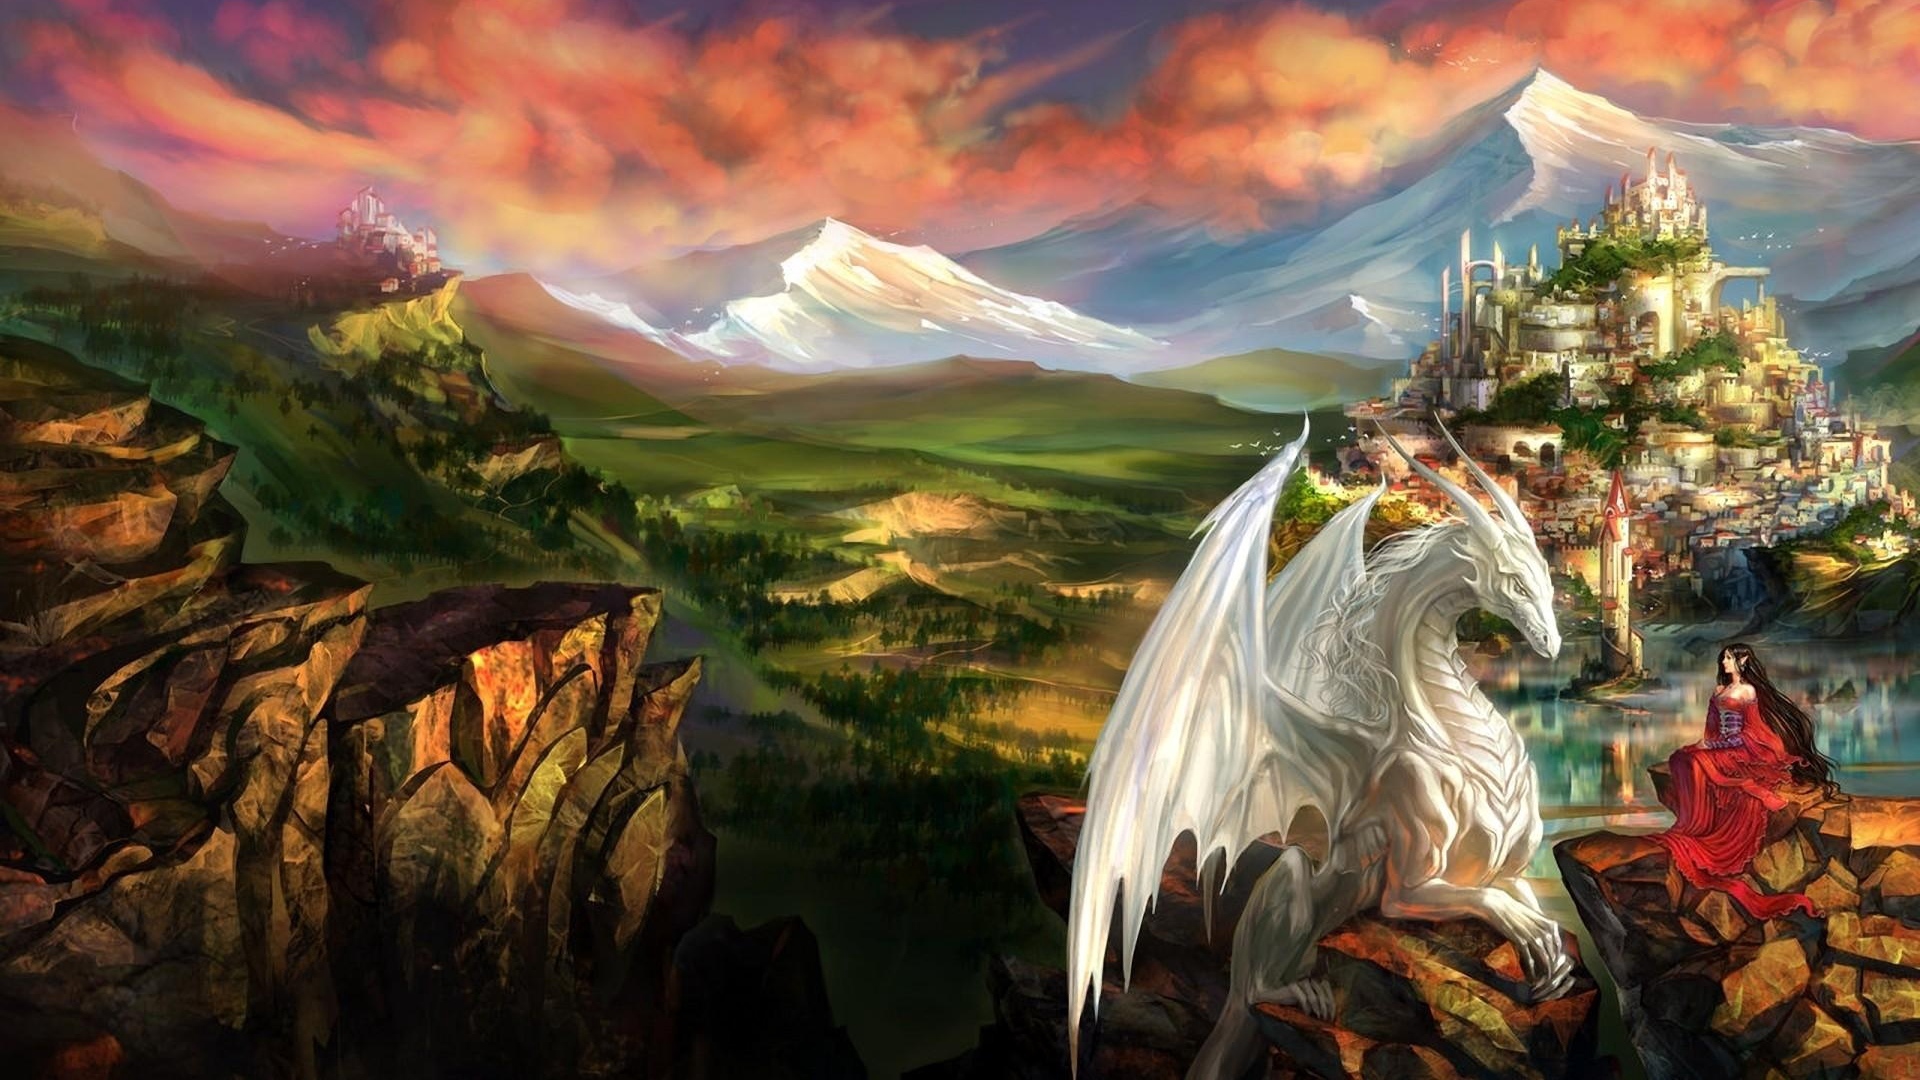 Wallpaper Dragon, Girl, Elf, Friendship, Mountains, - Fantasy Landscape With Dragon - HD Wallpaper 